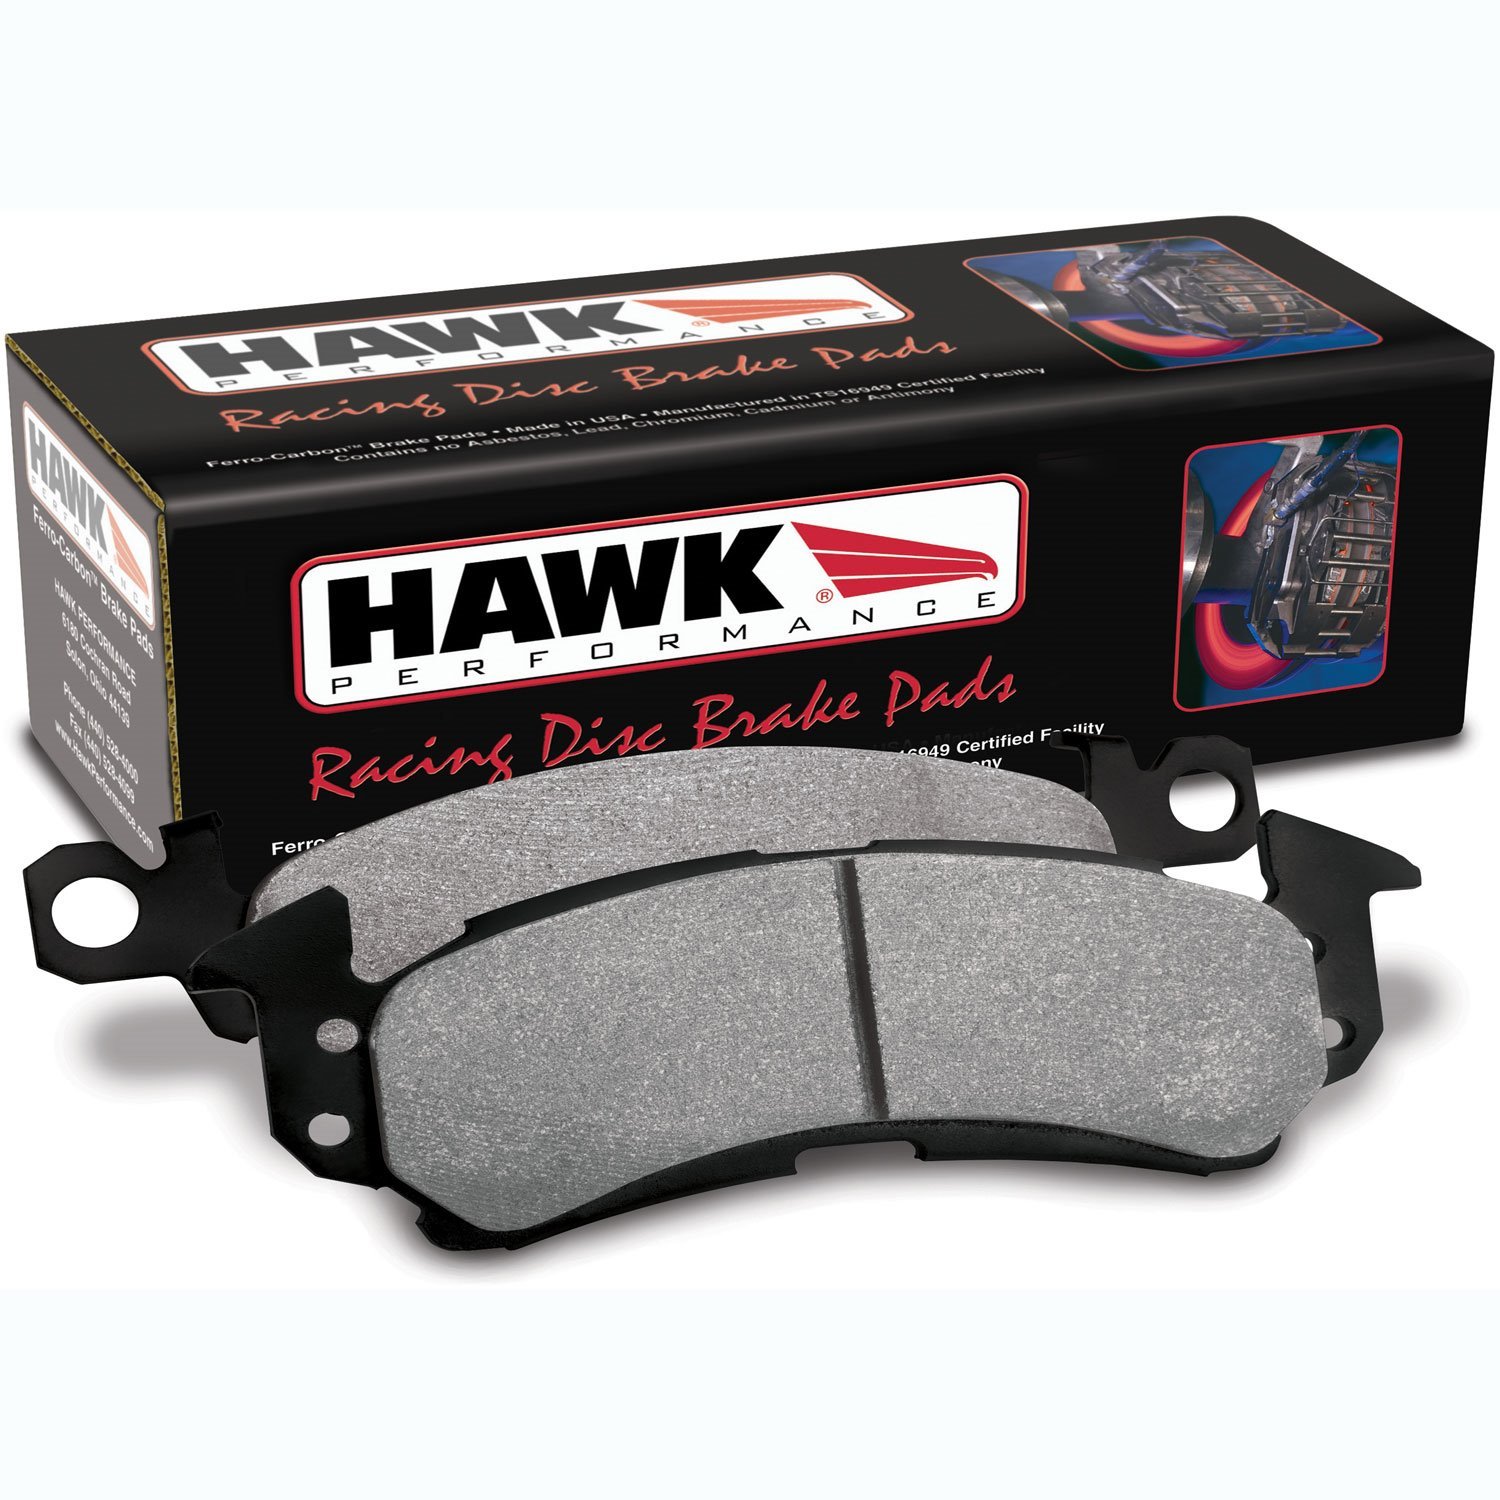 Disc Brake Pad HP Plus w/0.622 Thickness